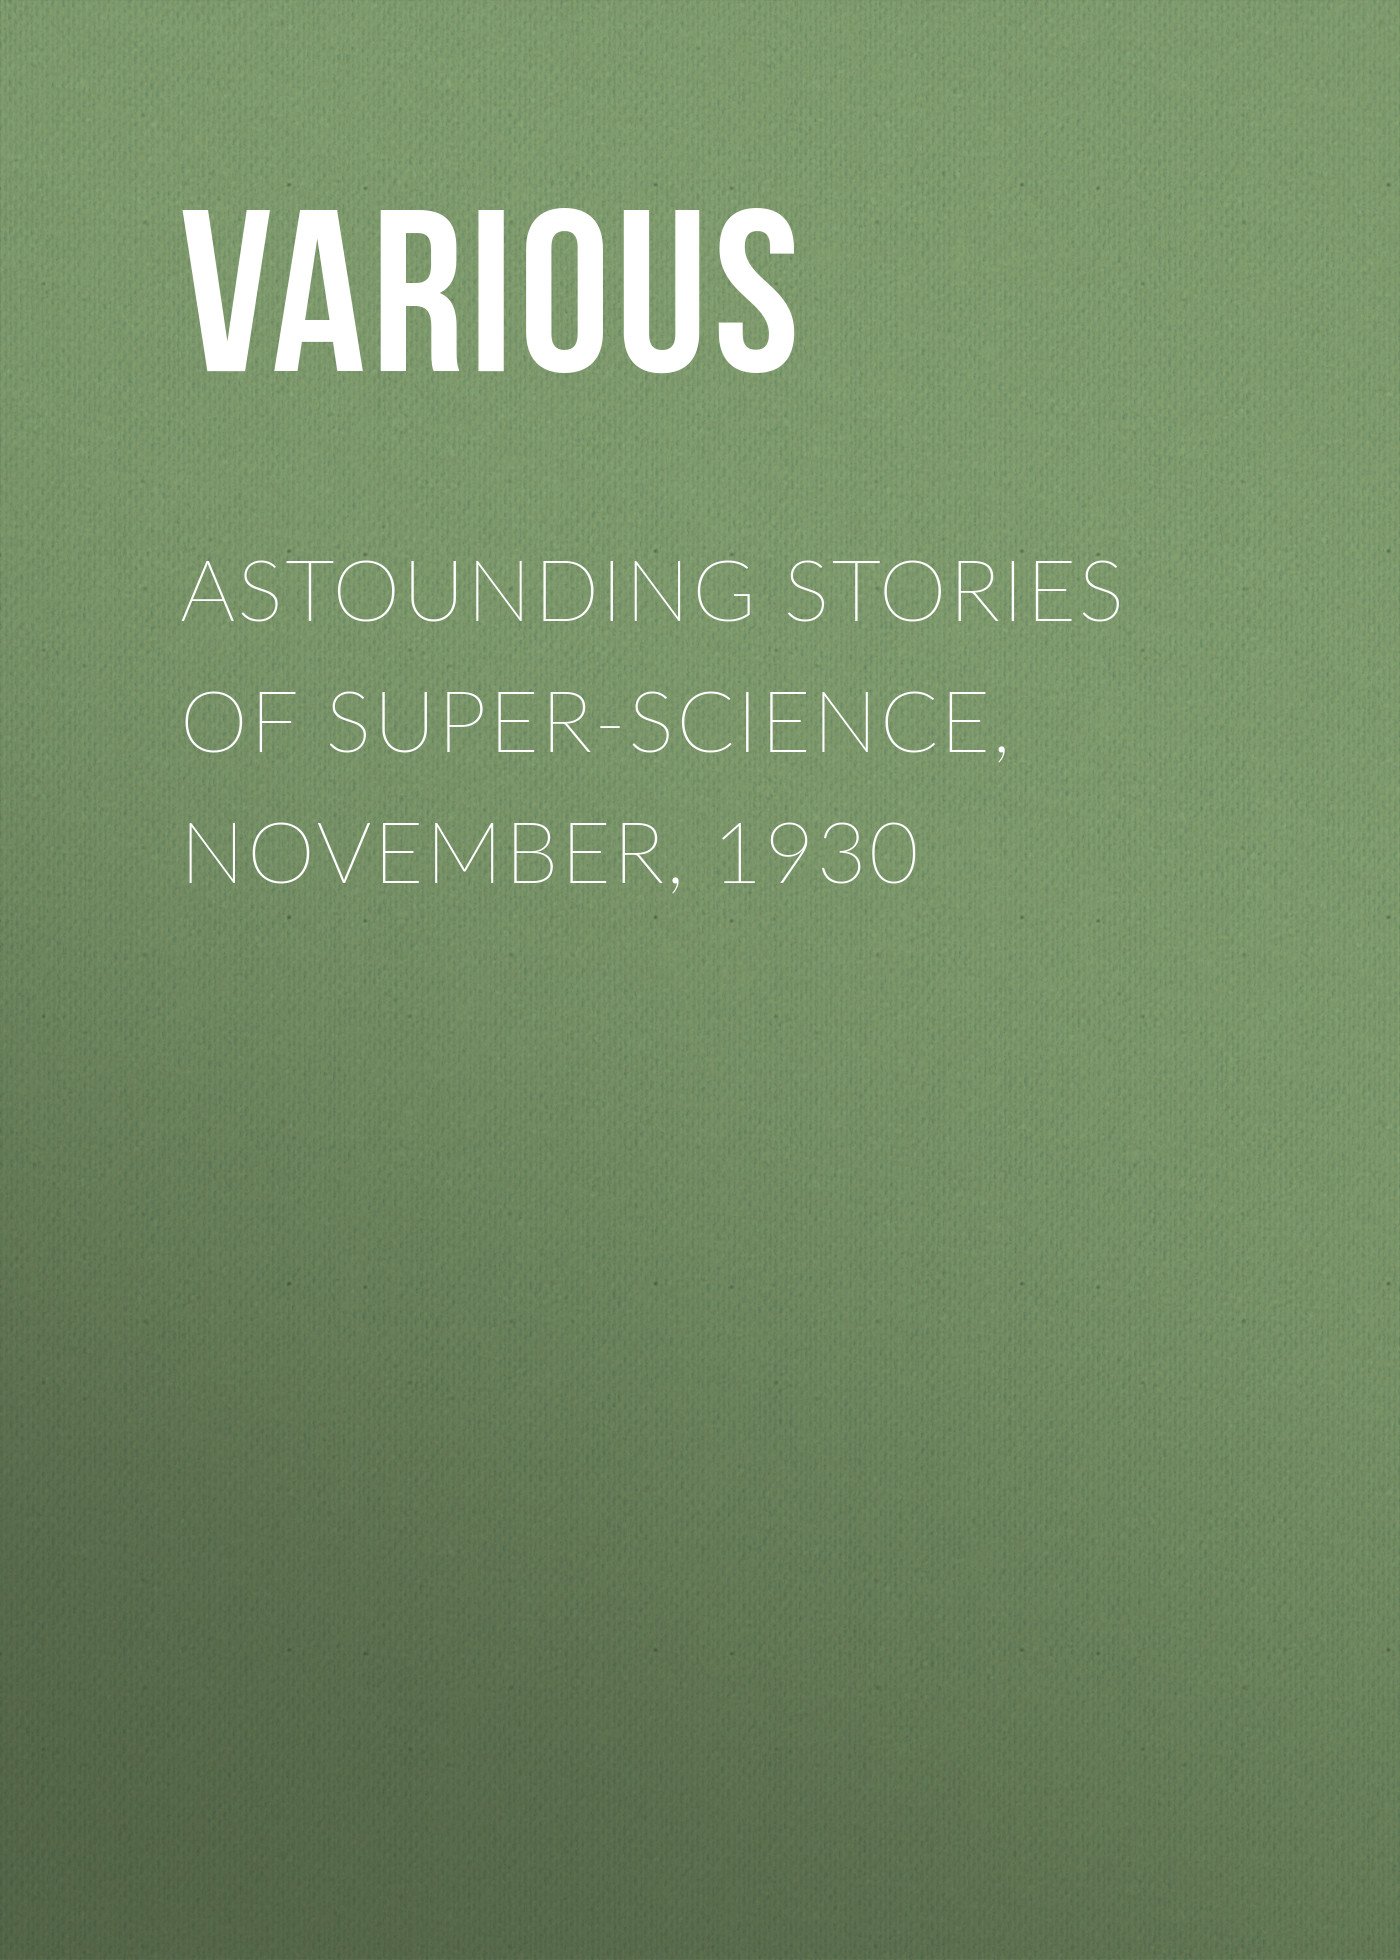 Various Astounding Stories of Super-Science, November, 1930